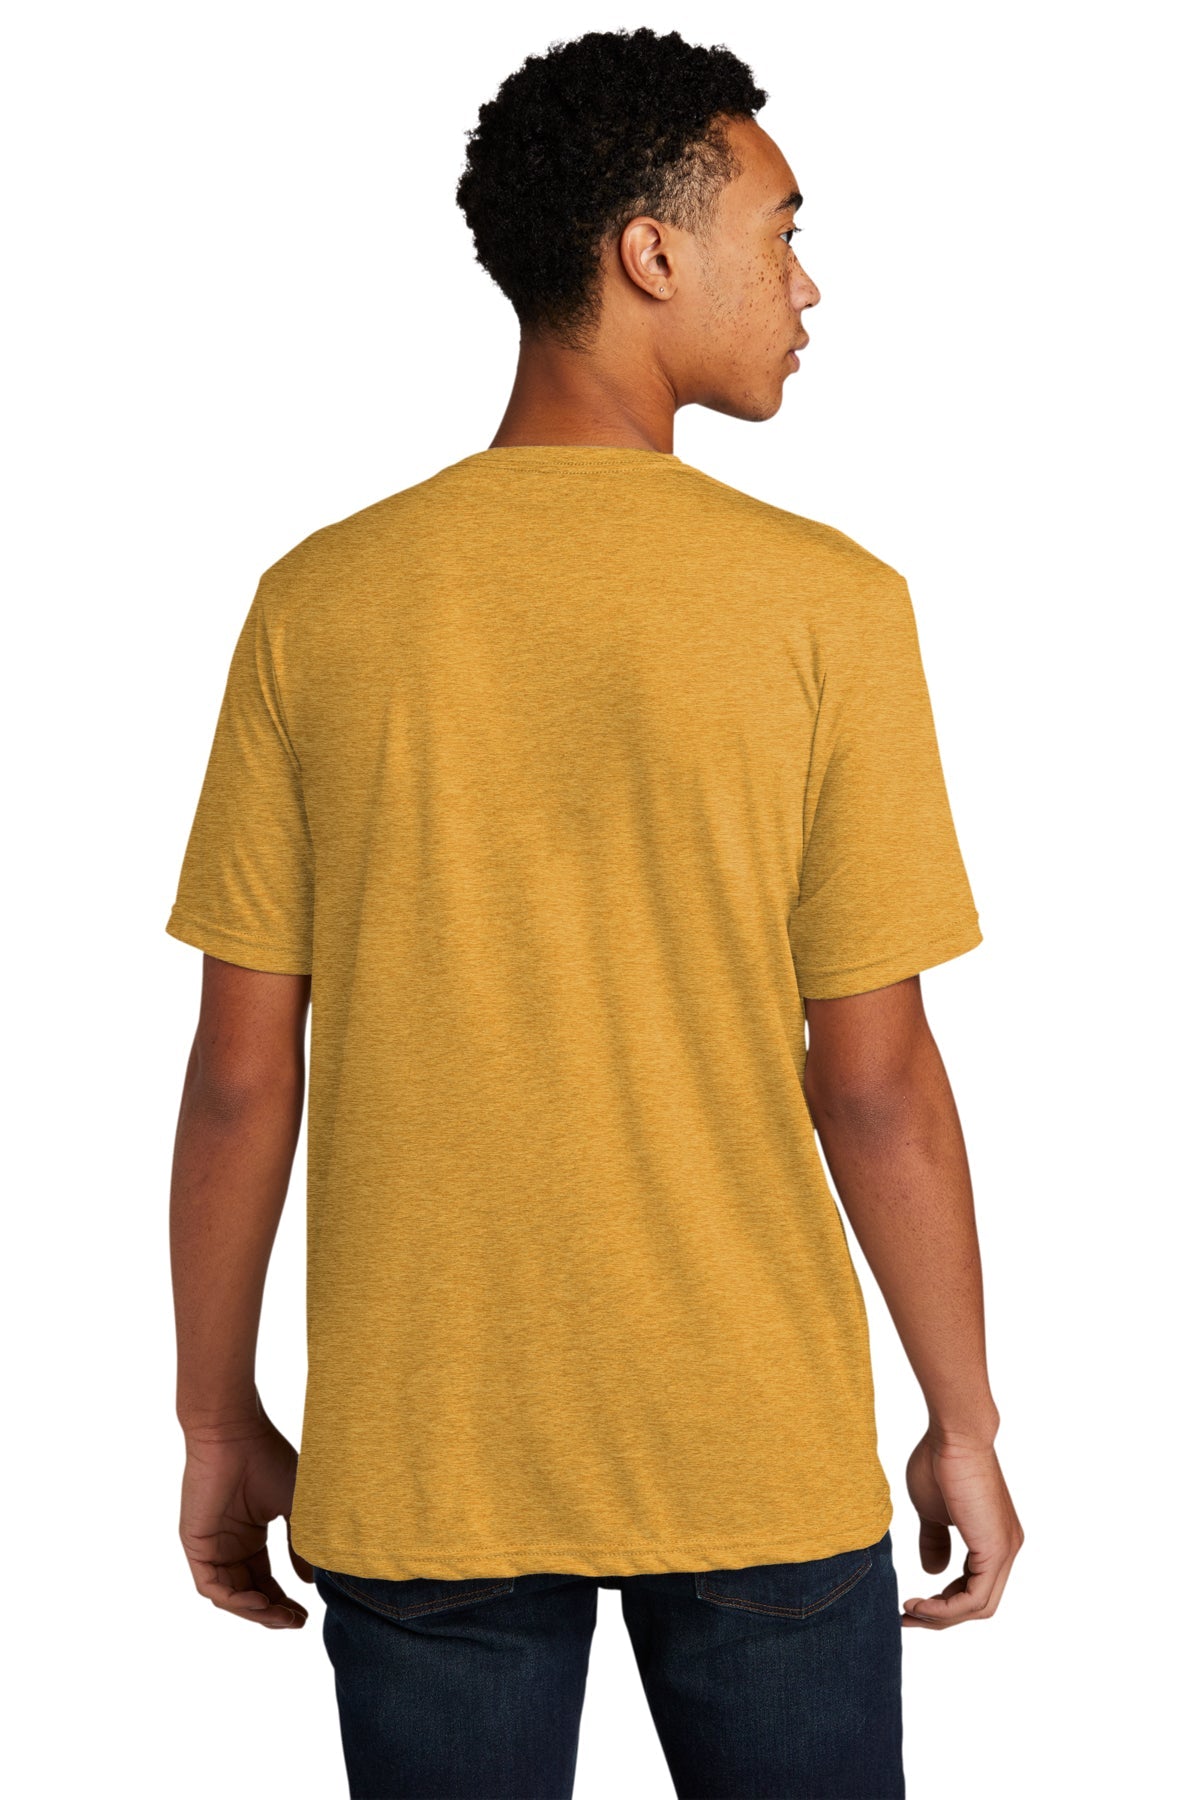 Next Level Unisex Poly Cotton Custom T-Shirts, Antique Gold